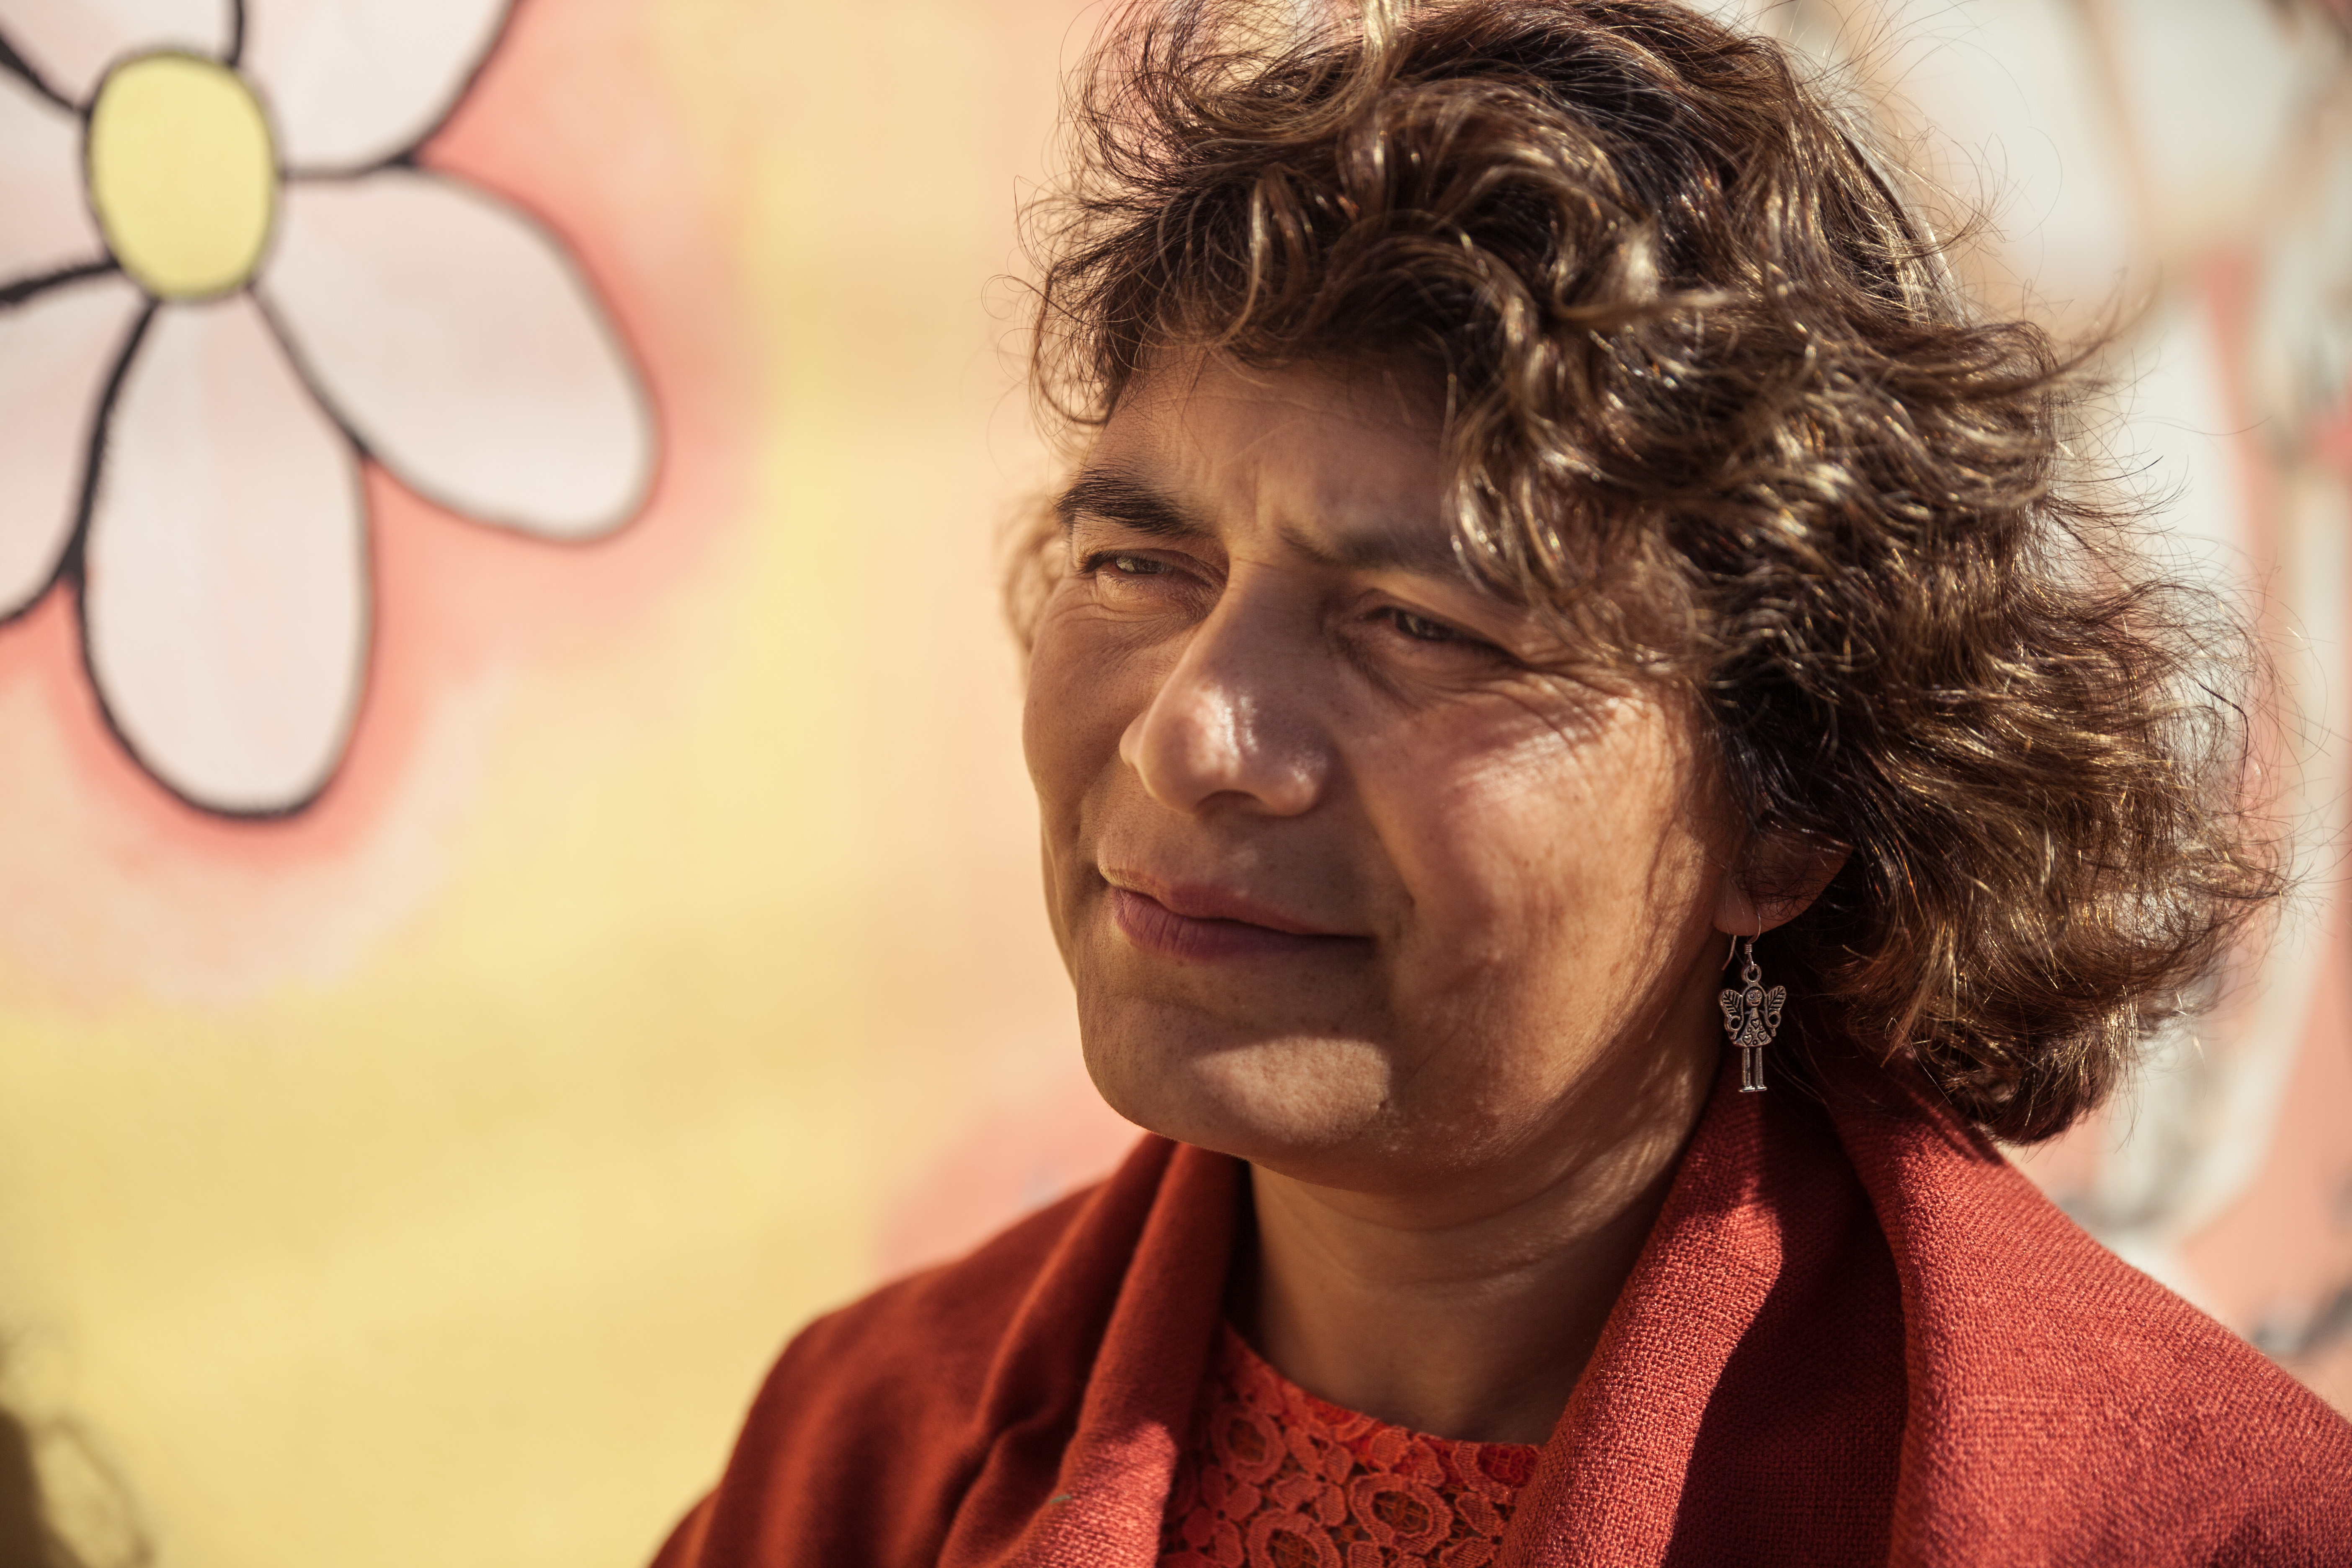 Eva Sánchez, director of the Lenca women’s rights organization Las Hormigas (The Ants), Honduras. © Pierre Fromentín 2016